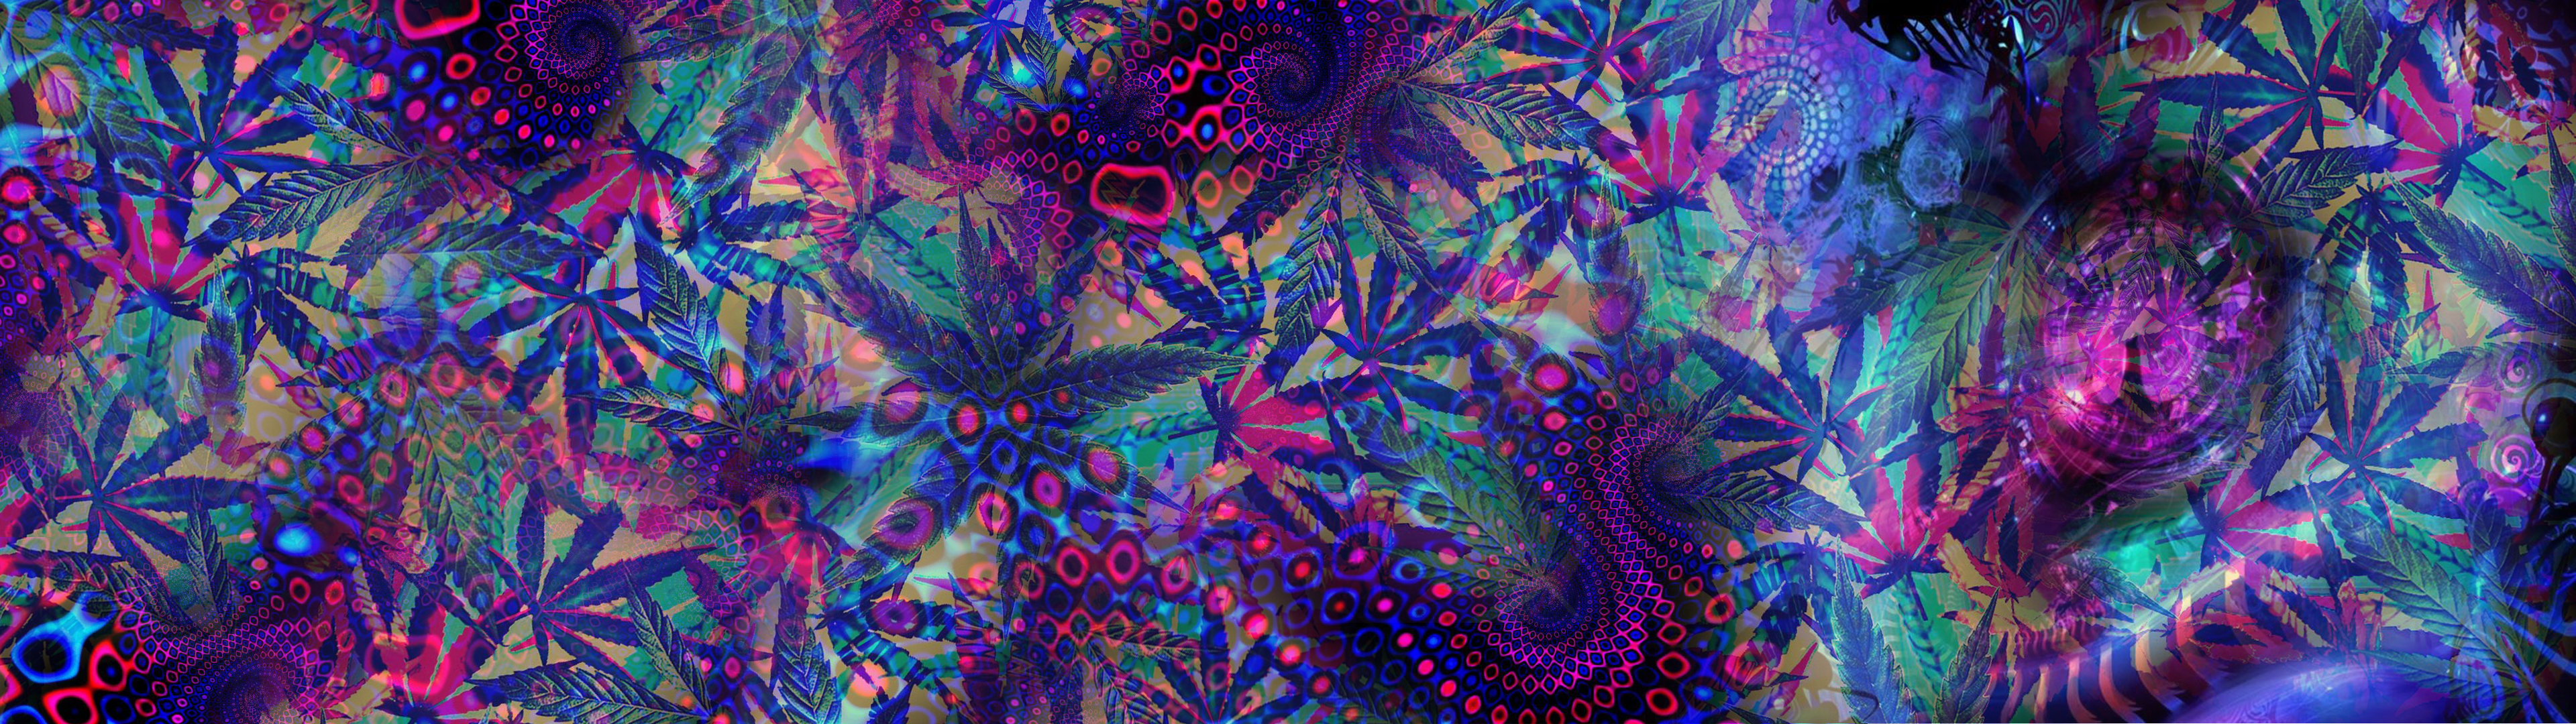 Trippy Cannabis Dual Screen Wallpaper HD by Shiro-420 on DeviantArt